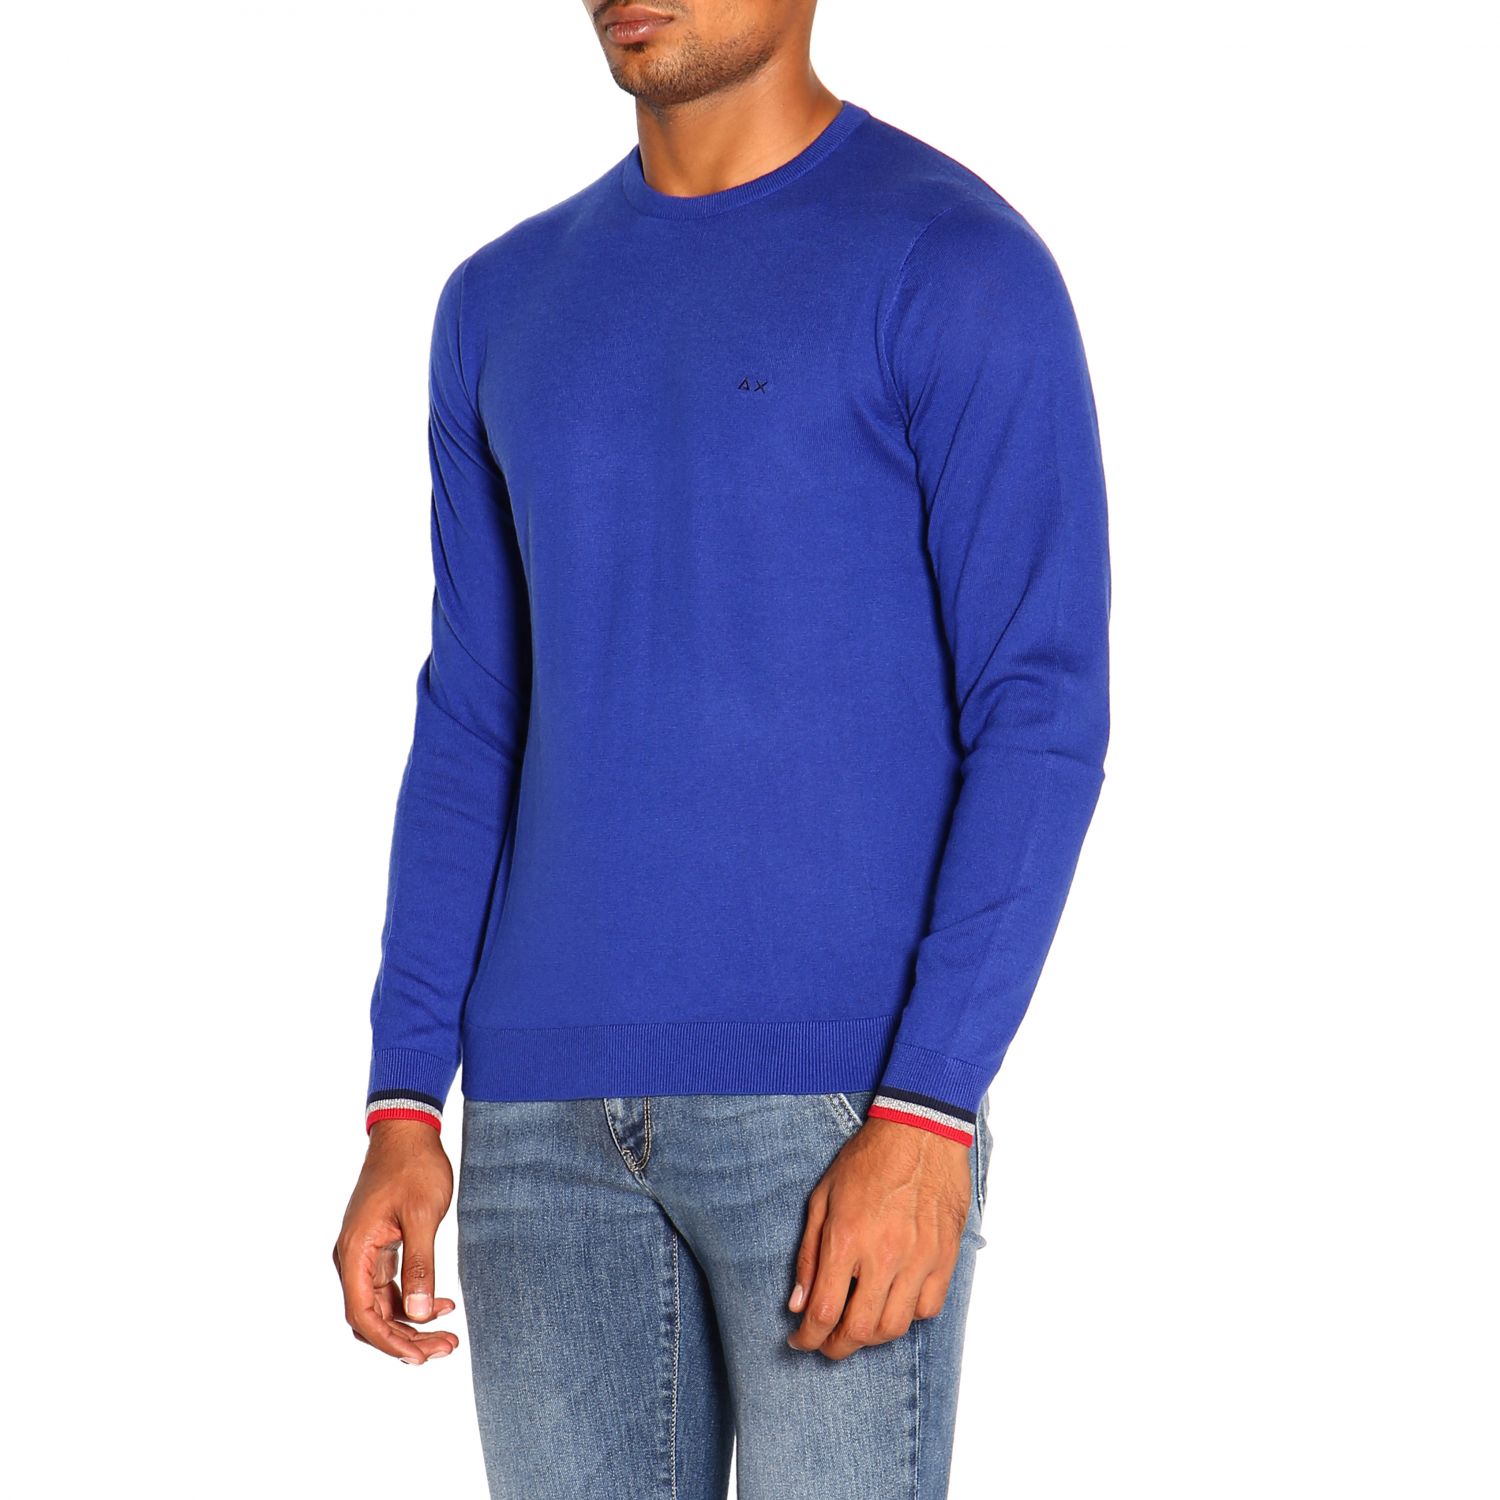 Sun 68 Outlet: Sweater men - Royal Blue | Sweater Sun 68 K29111 GIGLIO.COM